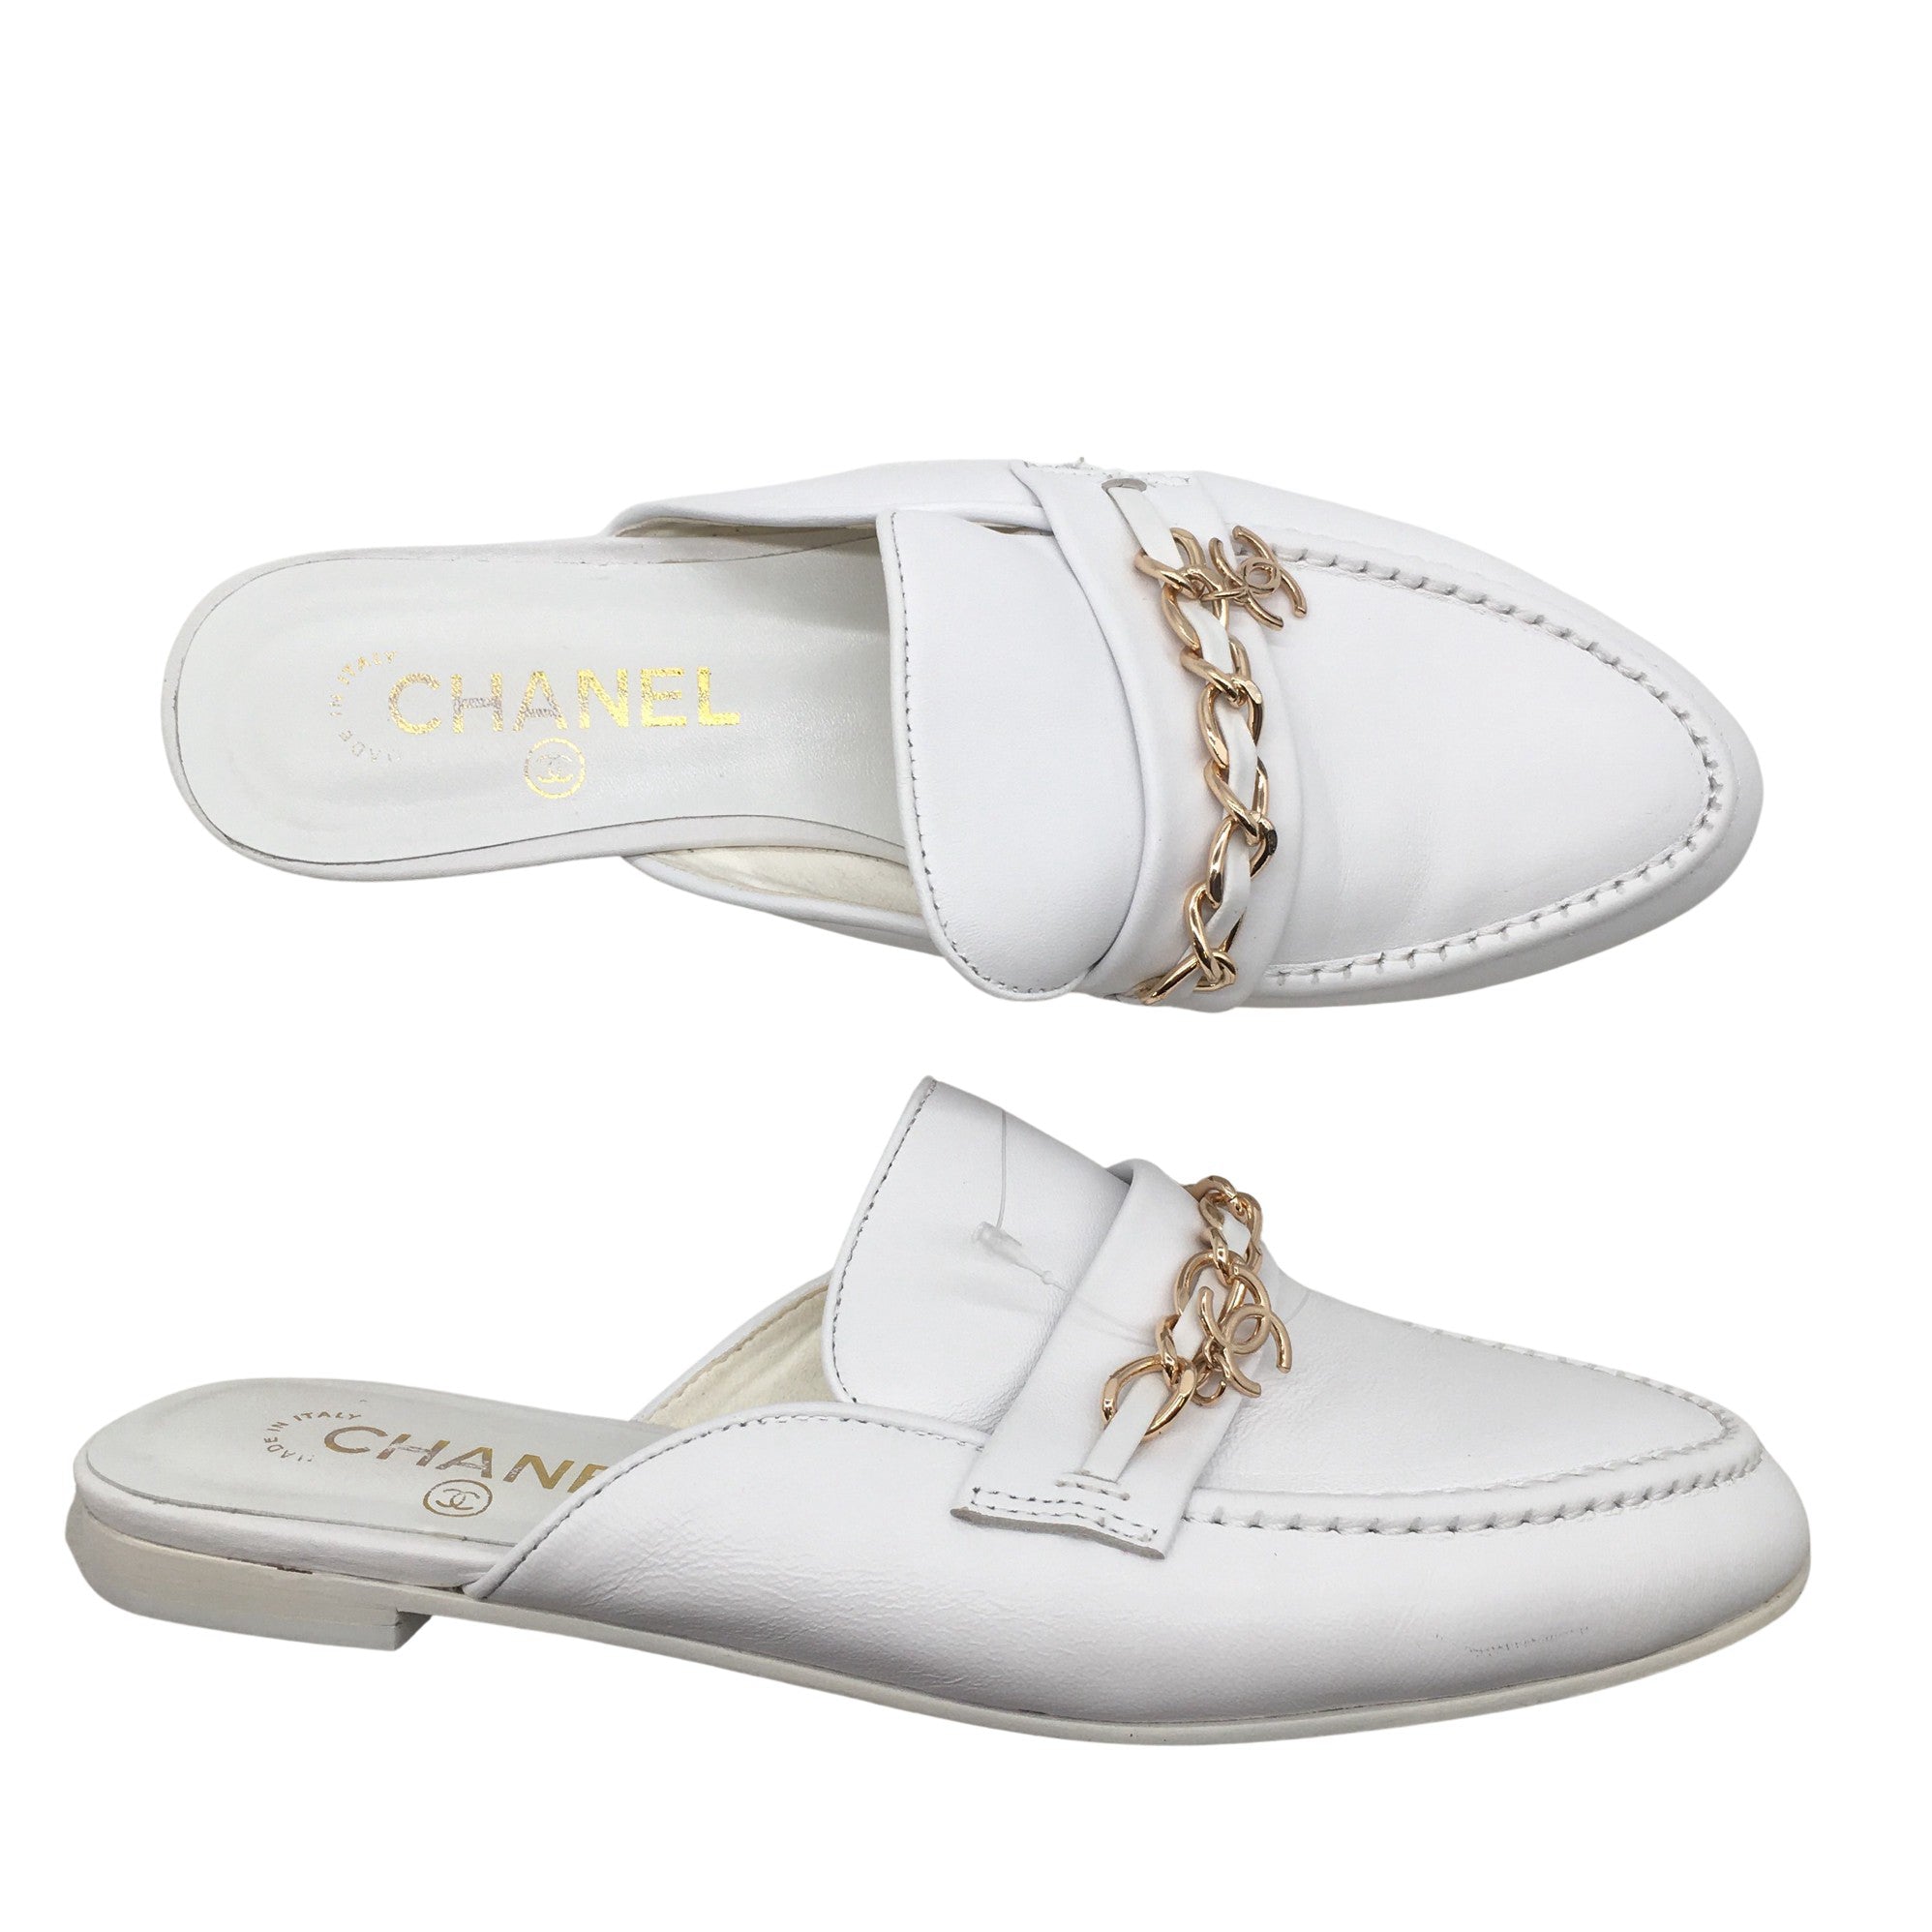 CHANEL  Shoes  Size 43us Chanel Unisex Slipon Sneakers  Poshmark